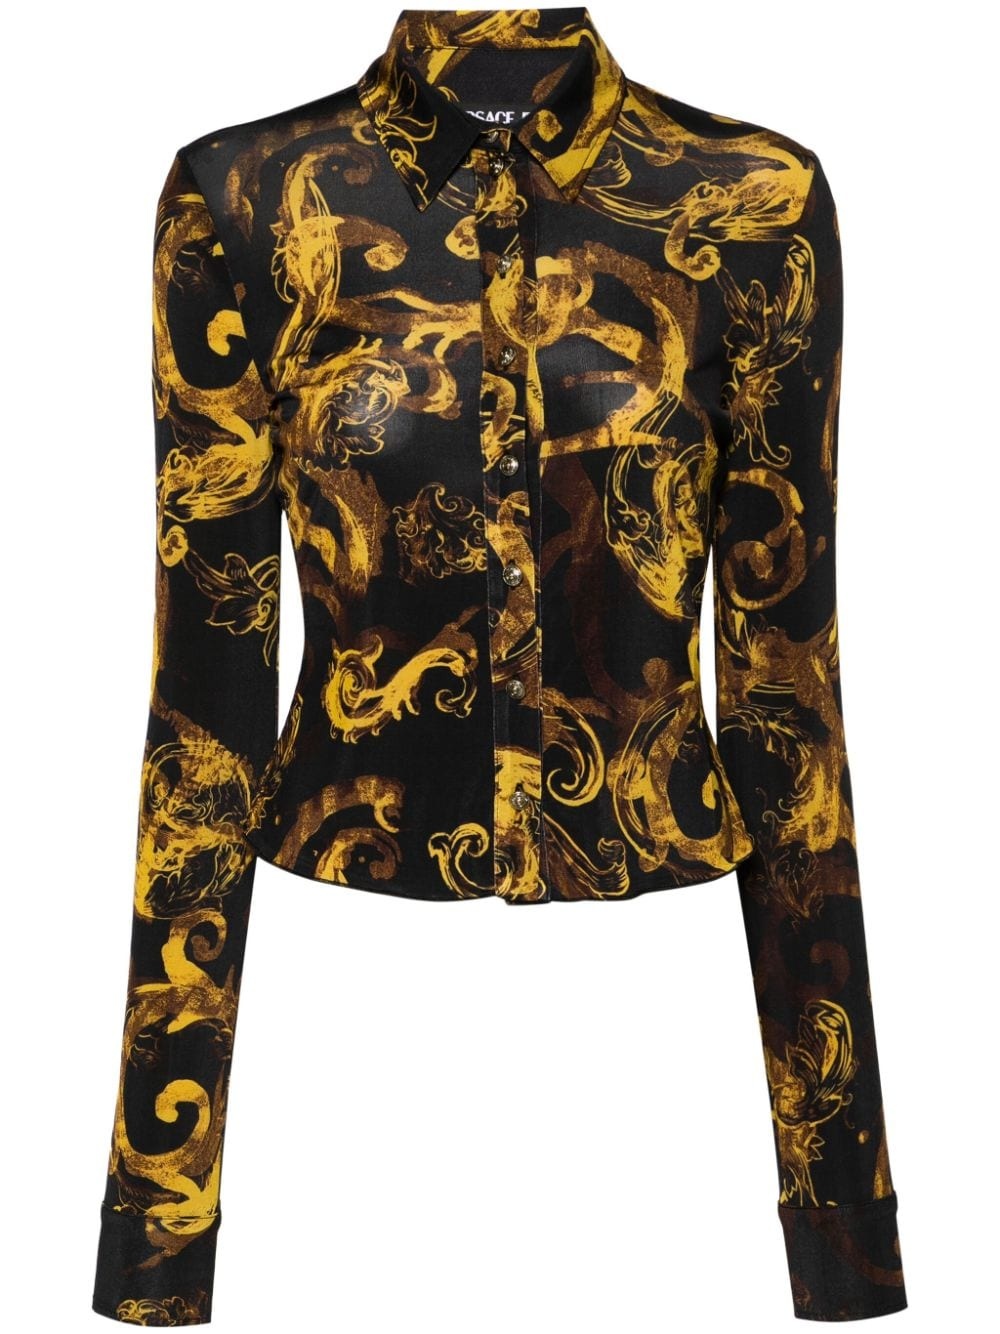 Watercolour Couture shirt - 1